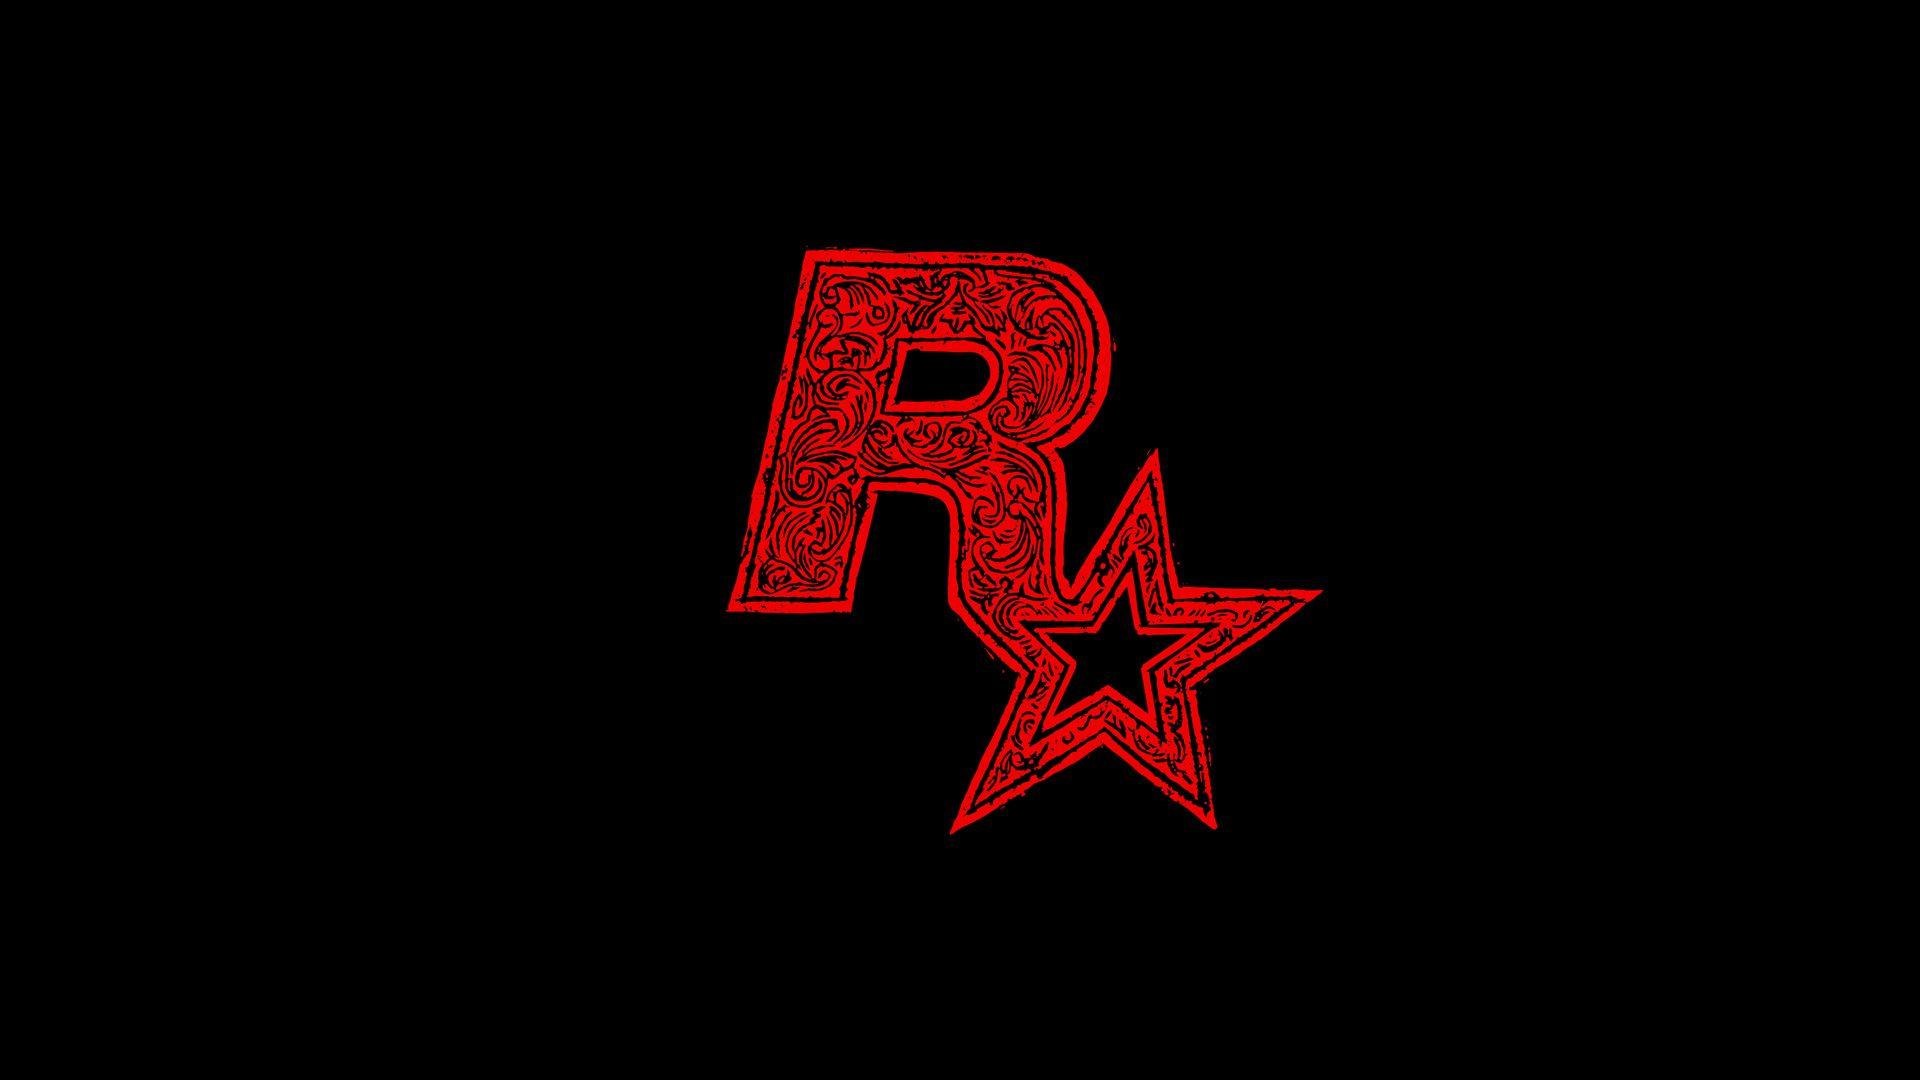 Rockstar Games Logo - Enter to Win the Black Linocut Rockstar Games Logo T-Shirt